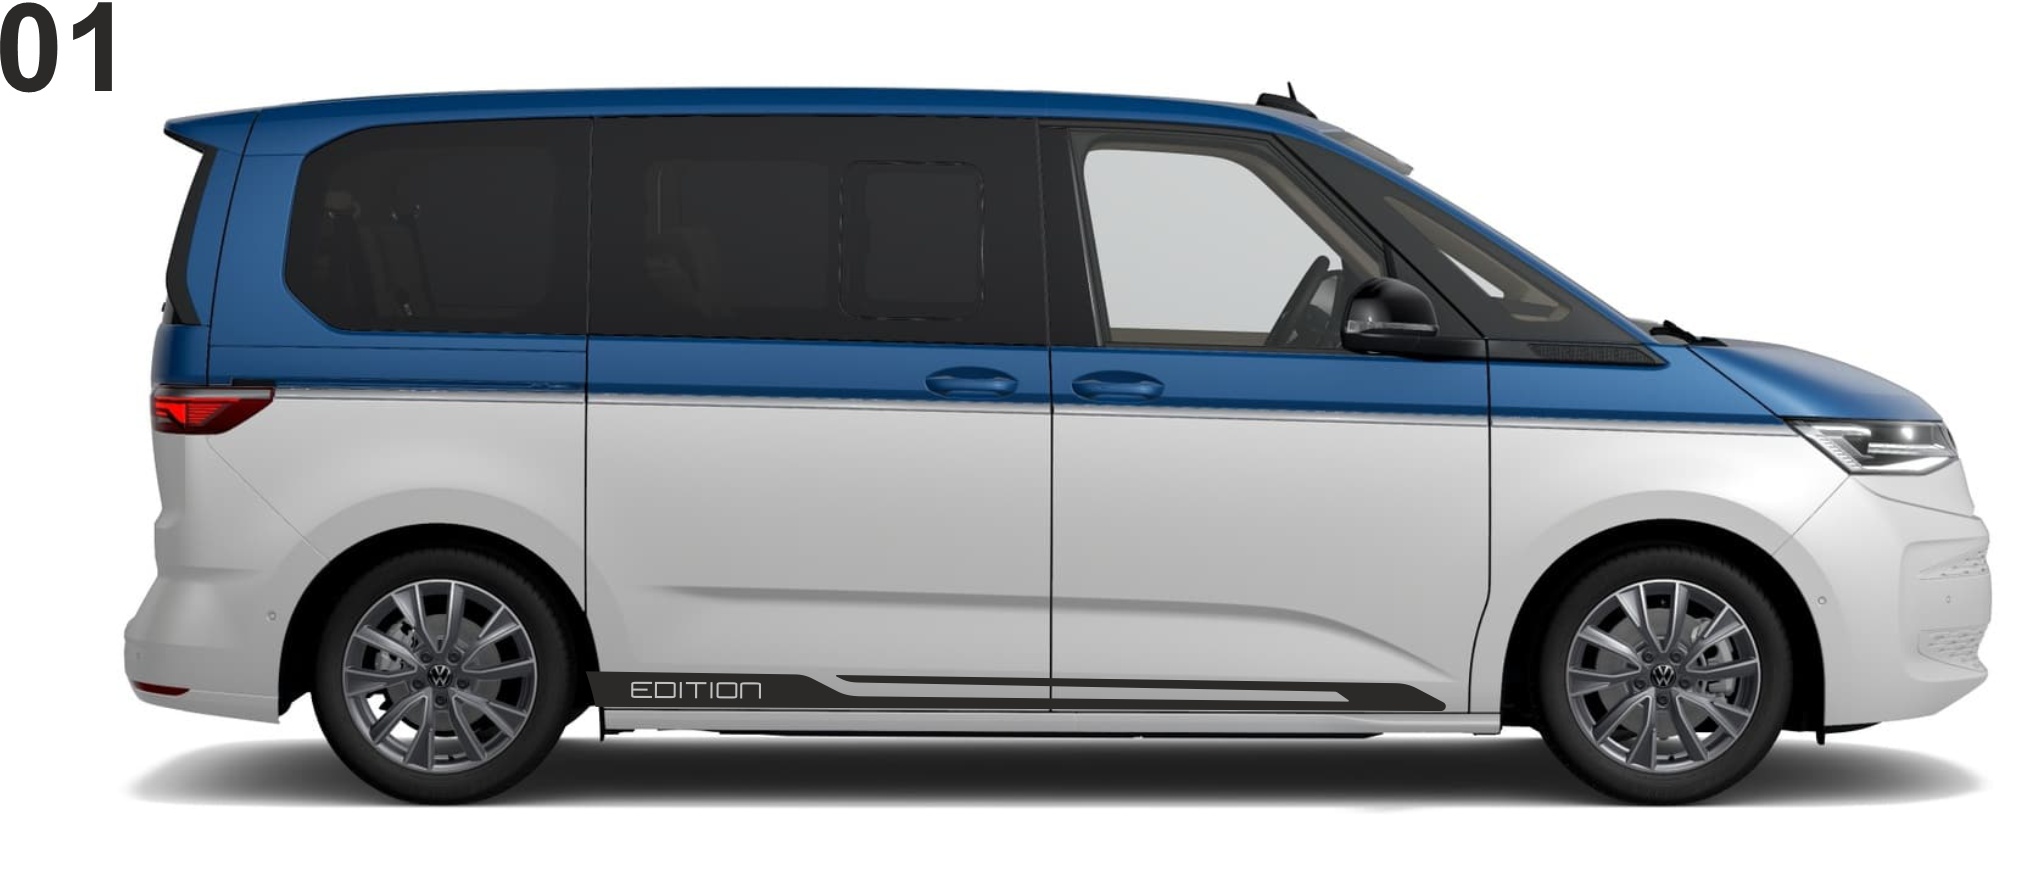 VW T7 WOLKSWAGEN naklejki decals stripes sticker aufkleber nalepky samolepky